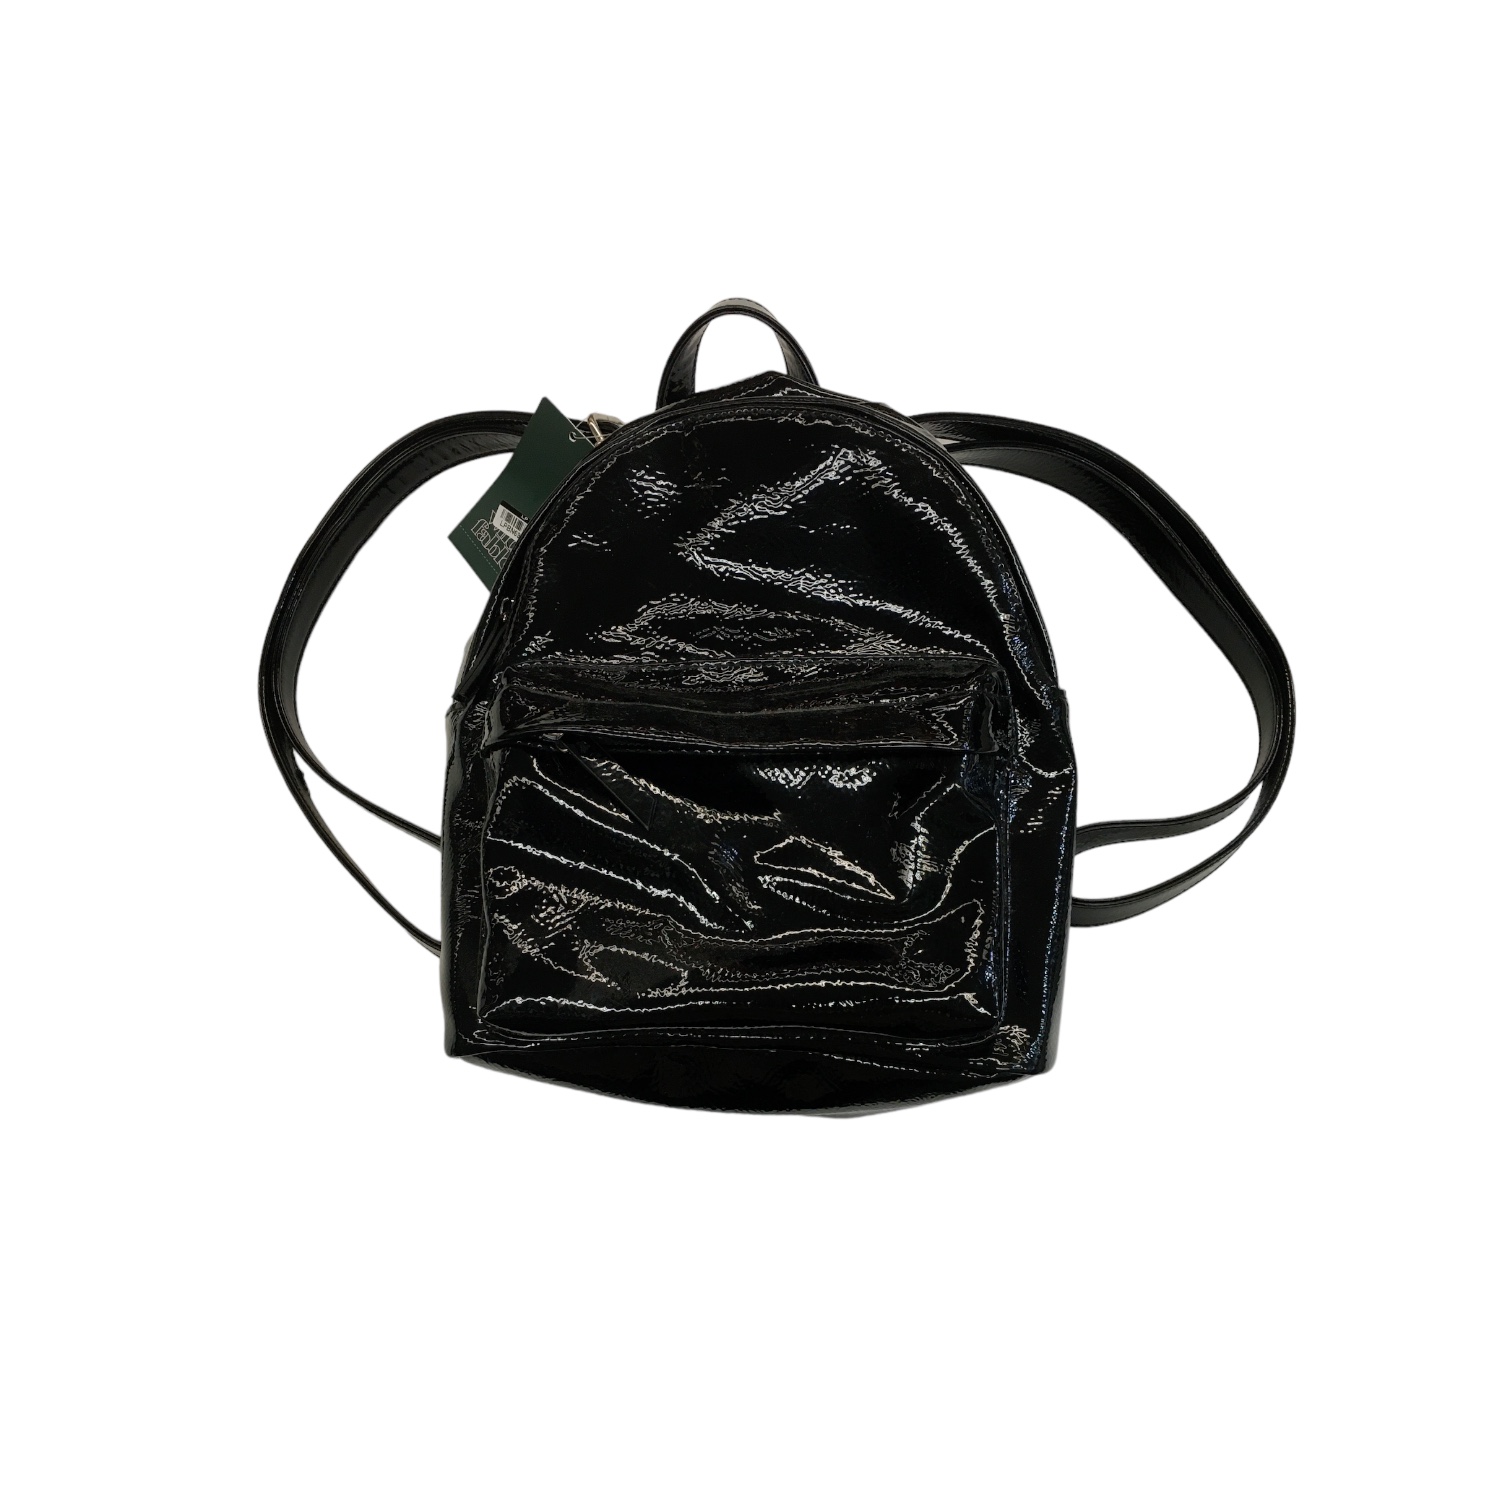 Backpack (Black) NWT  Pipsqueak Resale Boutique